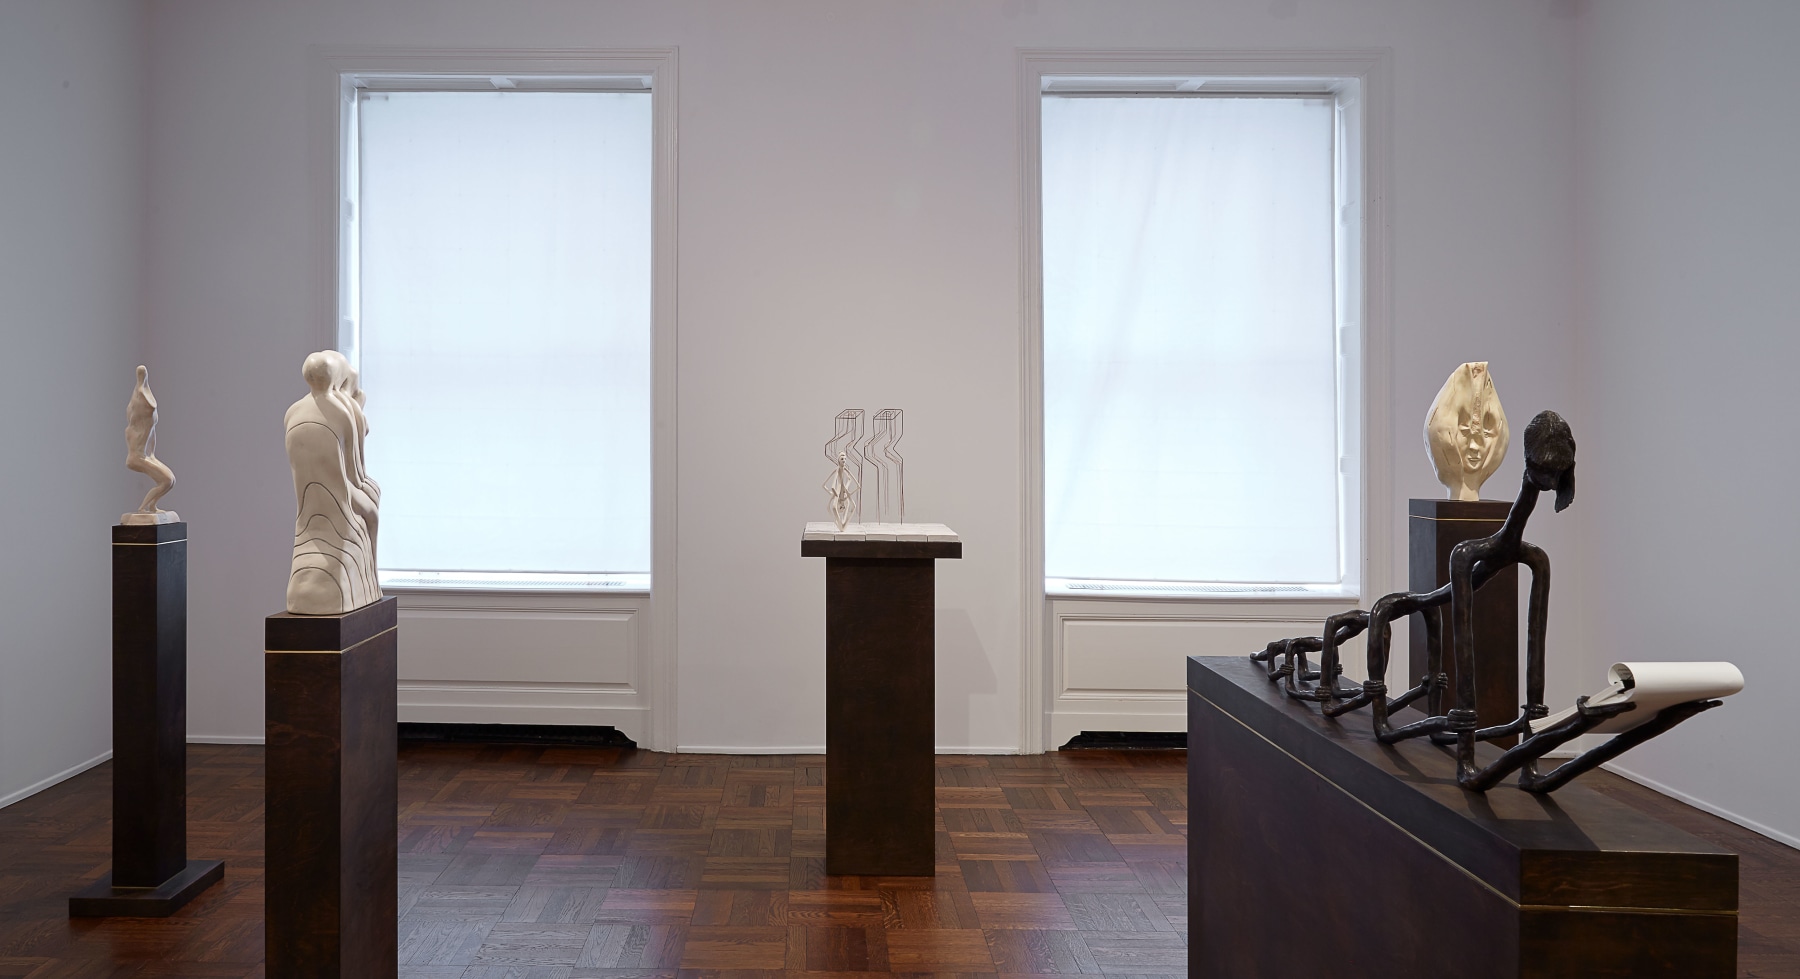 Enrico David, New York, 2014-2015, Installation Image 5